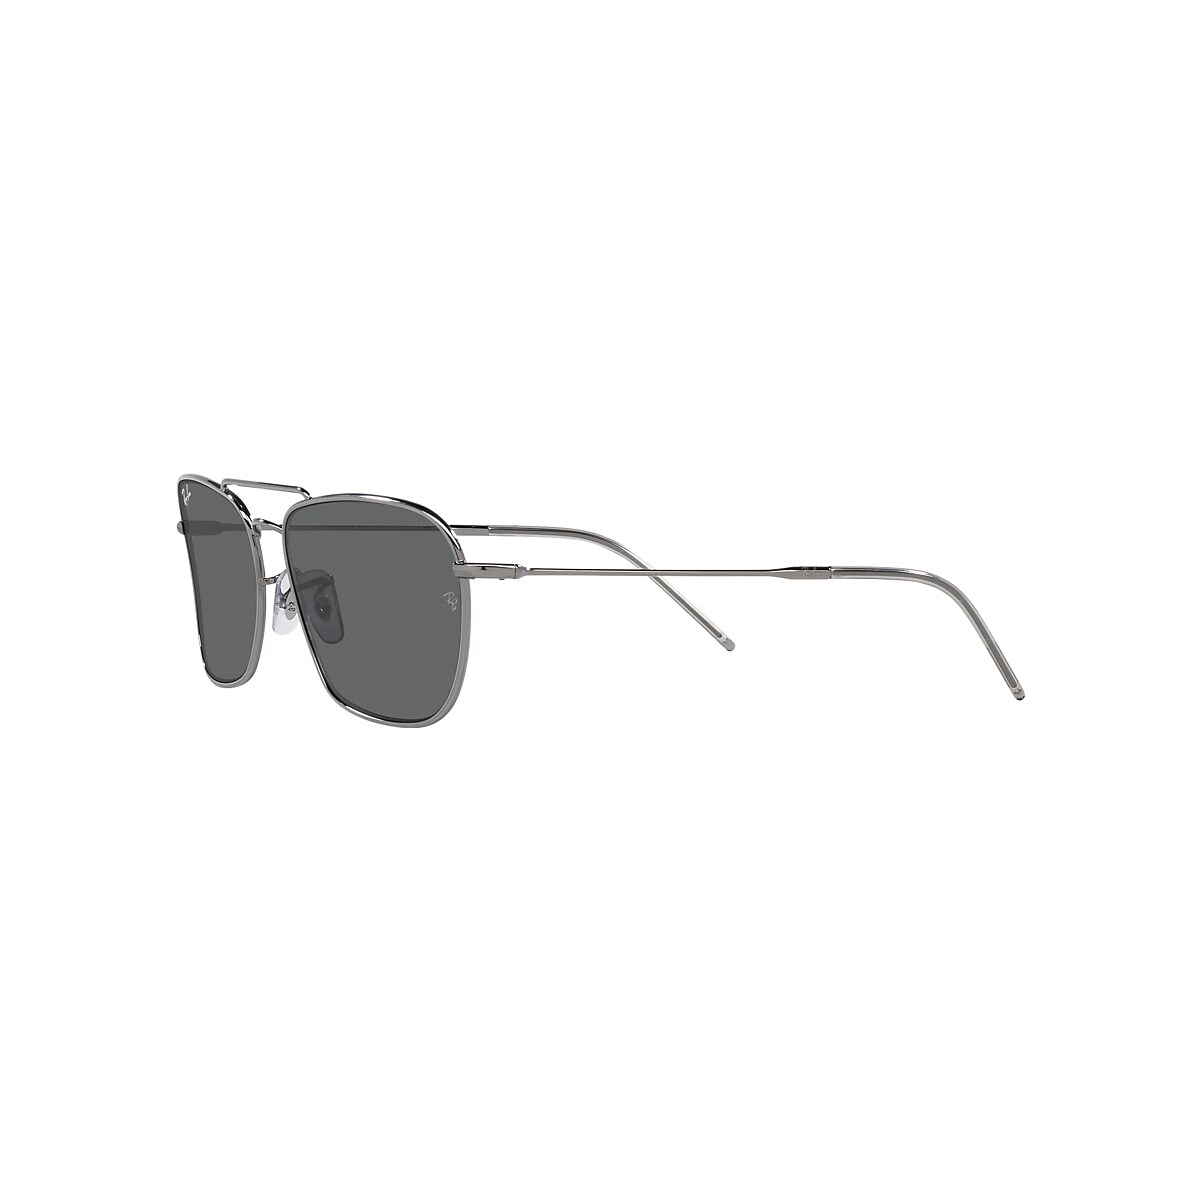 CARAVAN REVERSE Sunglasses in Gunmetal and Grey - RBR0102S | Ray